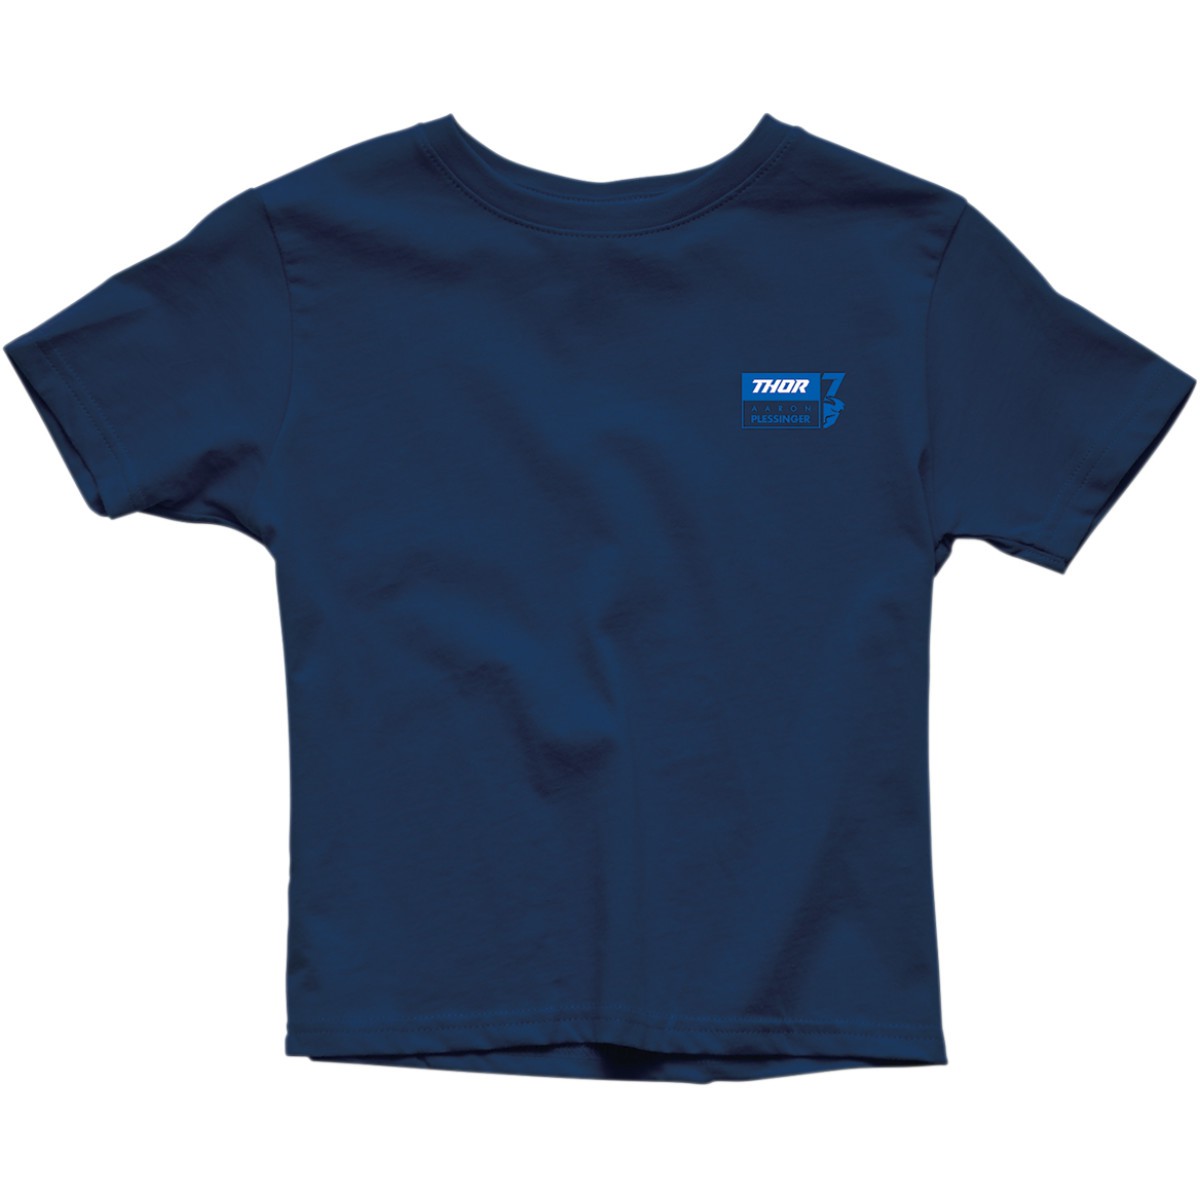 T-Shirt Enfant Manche Courte - Col Rond - THOR PLESSINGER N°7 2021